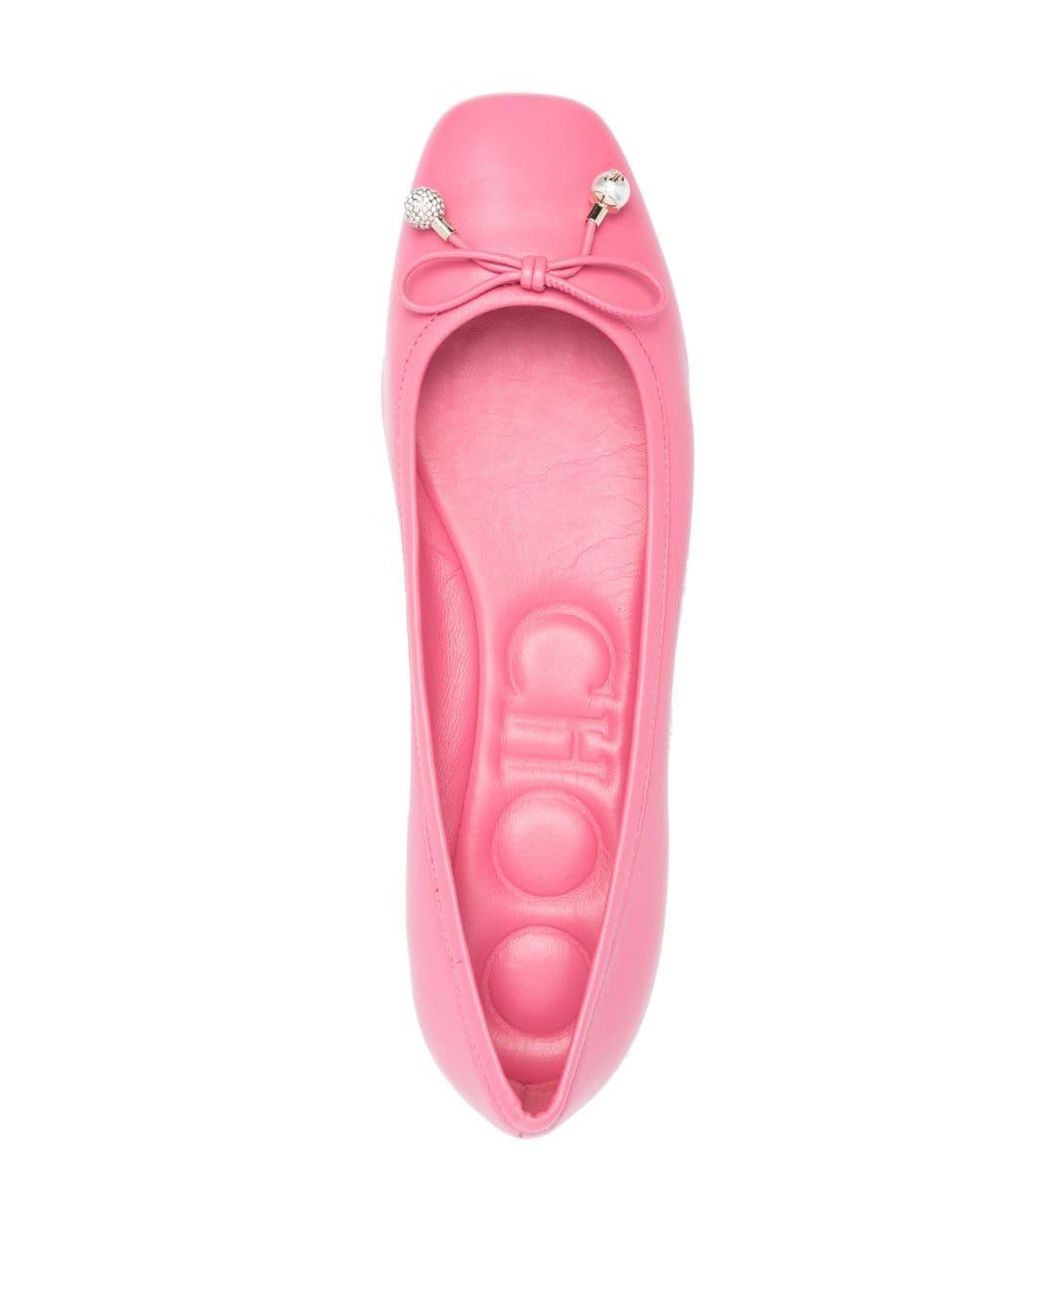 Jimmy Choo Elme Ballerina Shoes Pink |